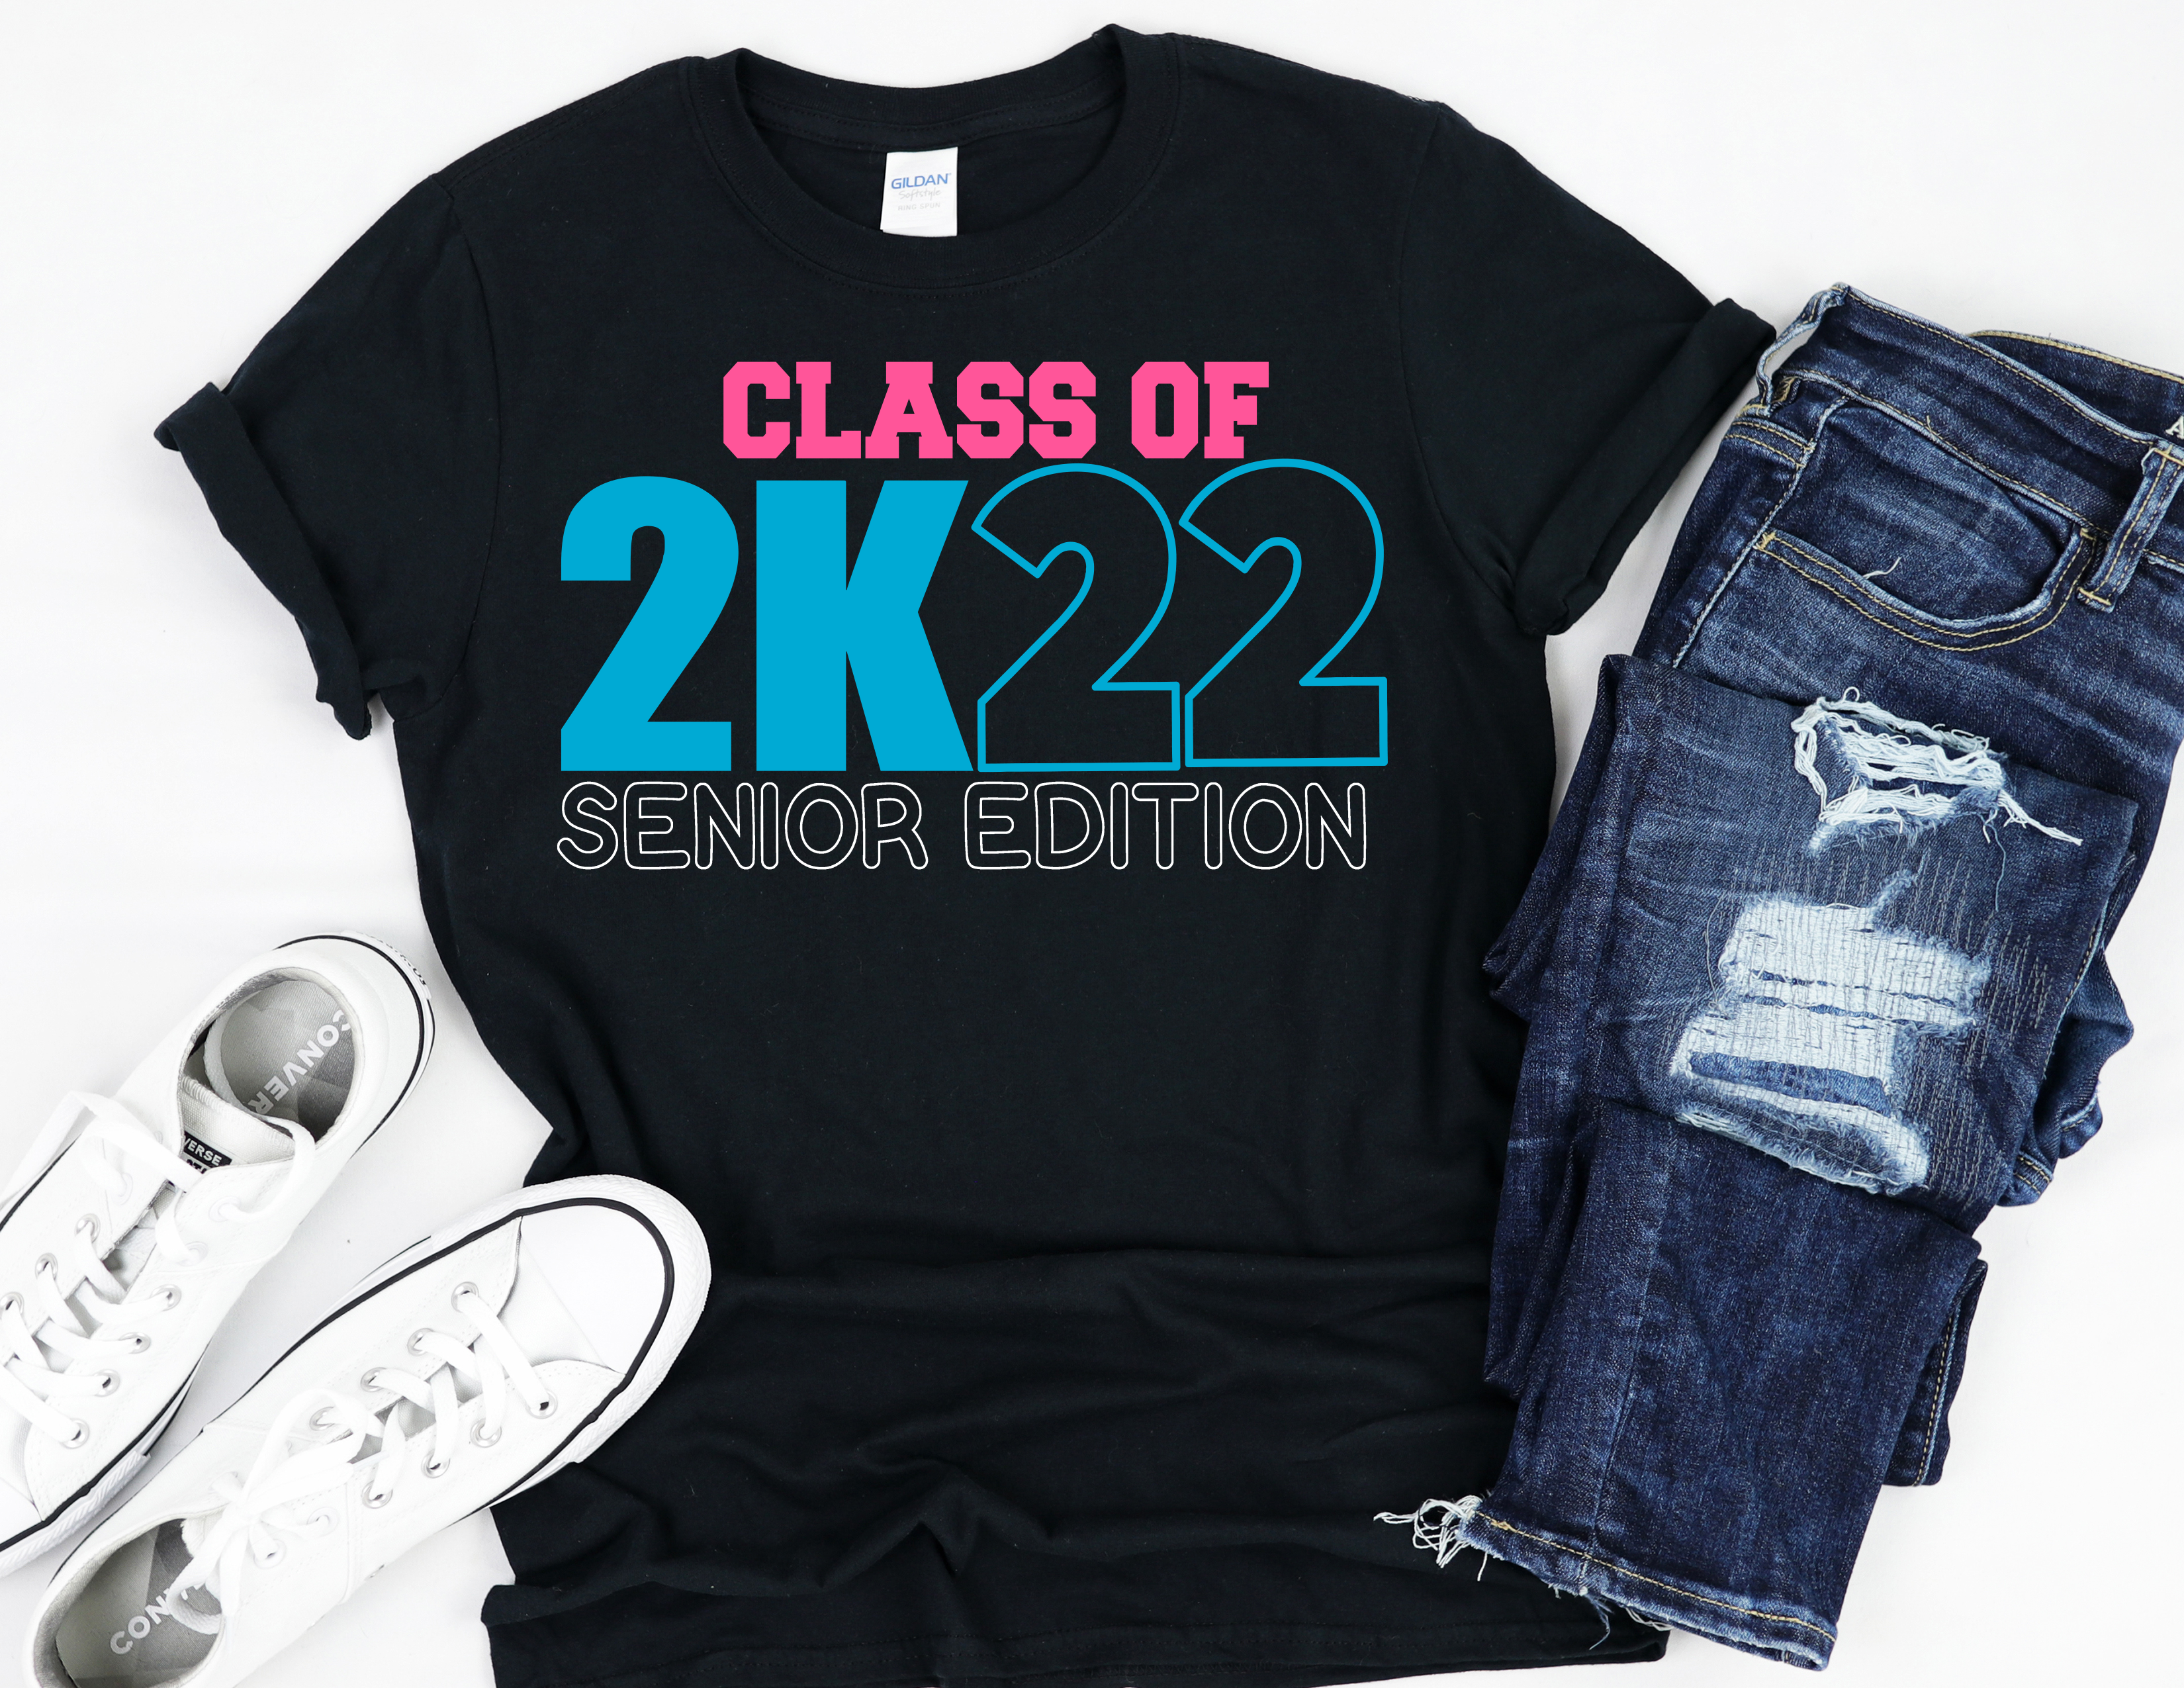 Class of 2K22